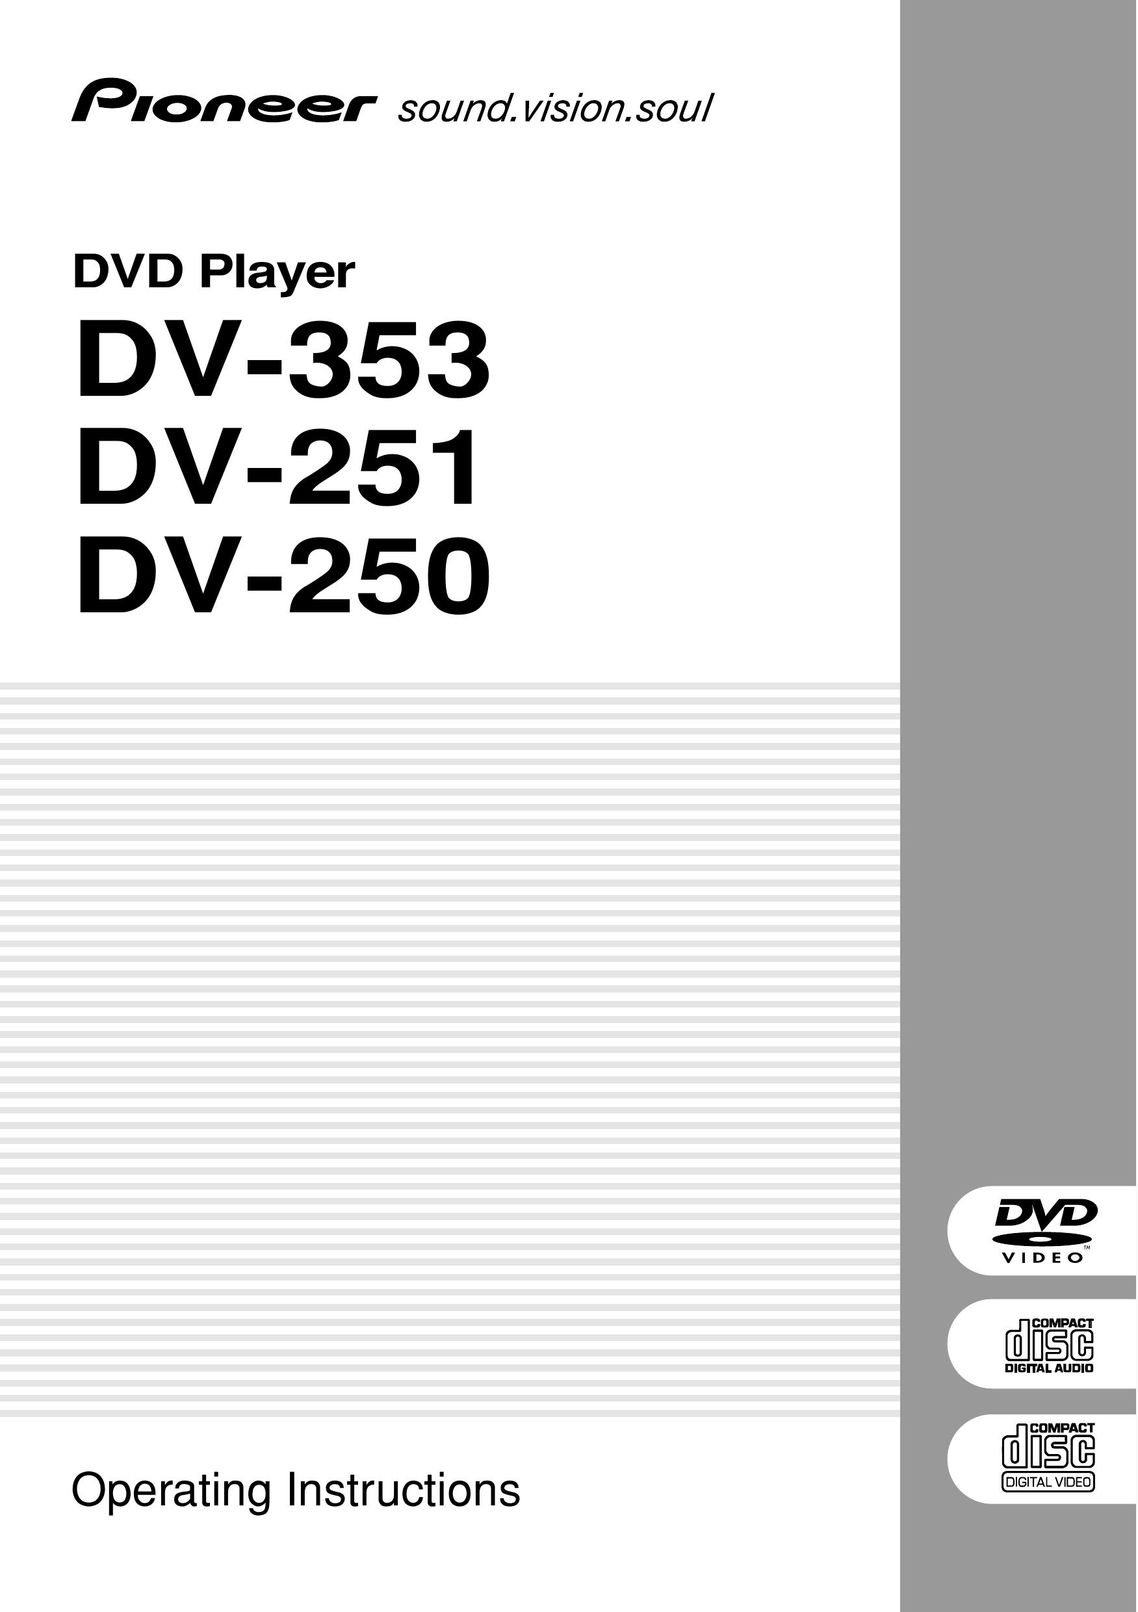 Pioneer DV-250 DVD Player User Manual